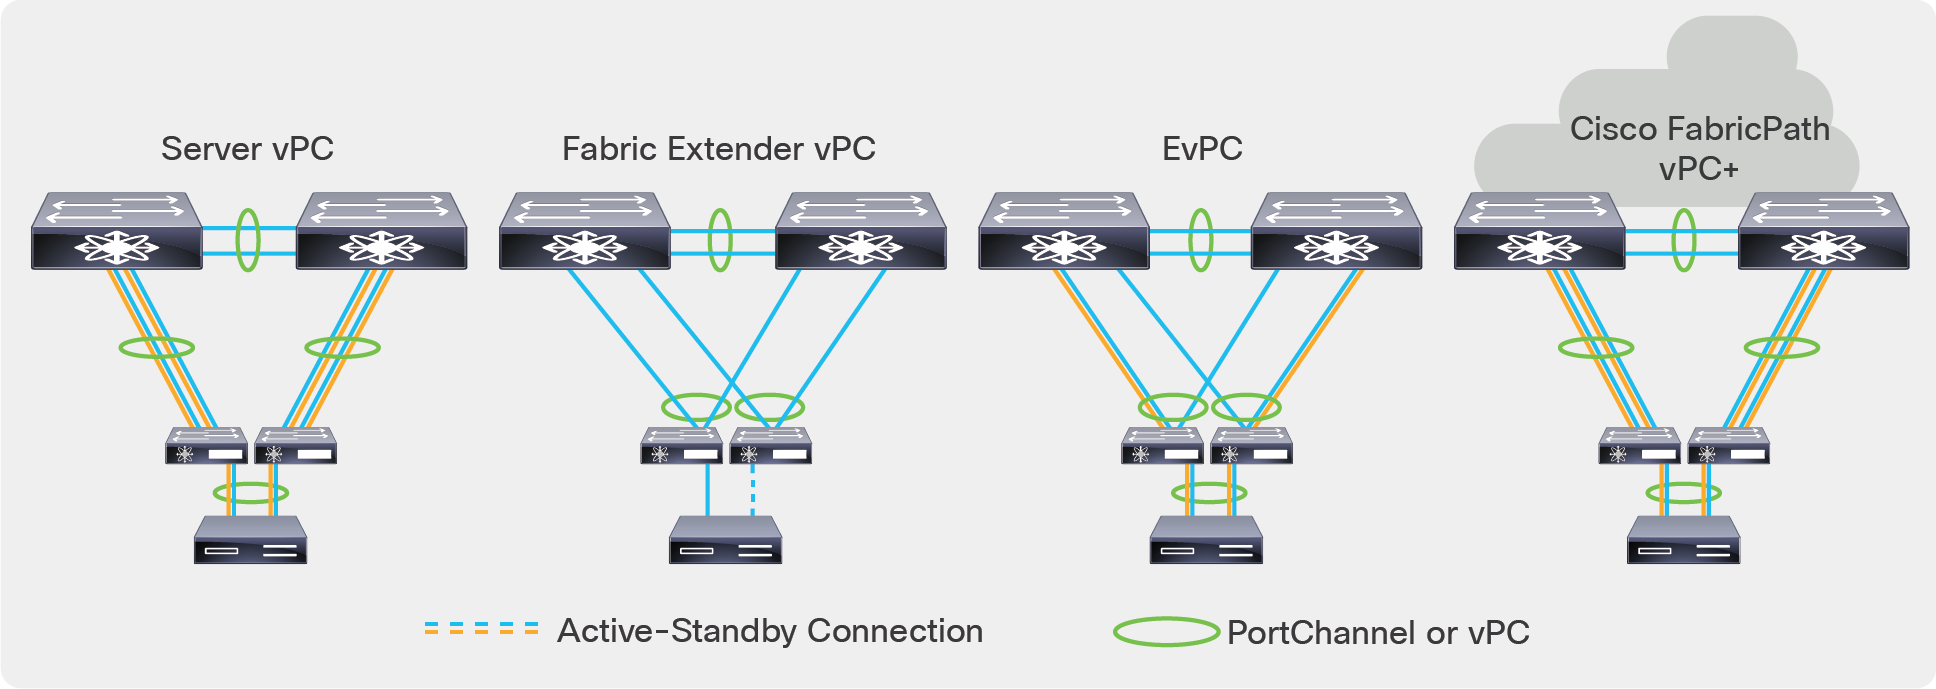 Cisco Nexus 2300 Platform Fabric Extenders Design Models, from Left to Right: Server vPC, Fabric Extender vPC, EvPC, and vPC+